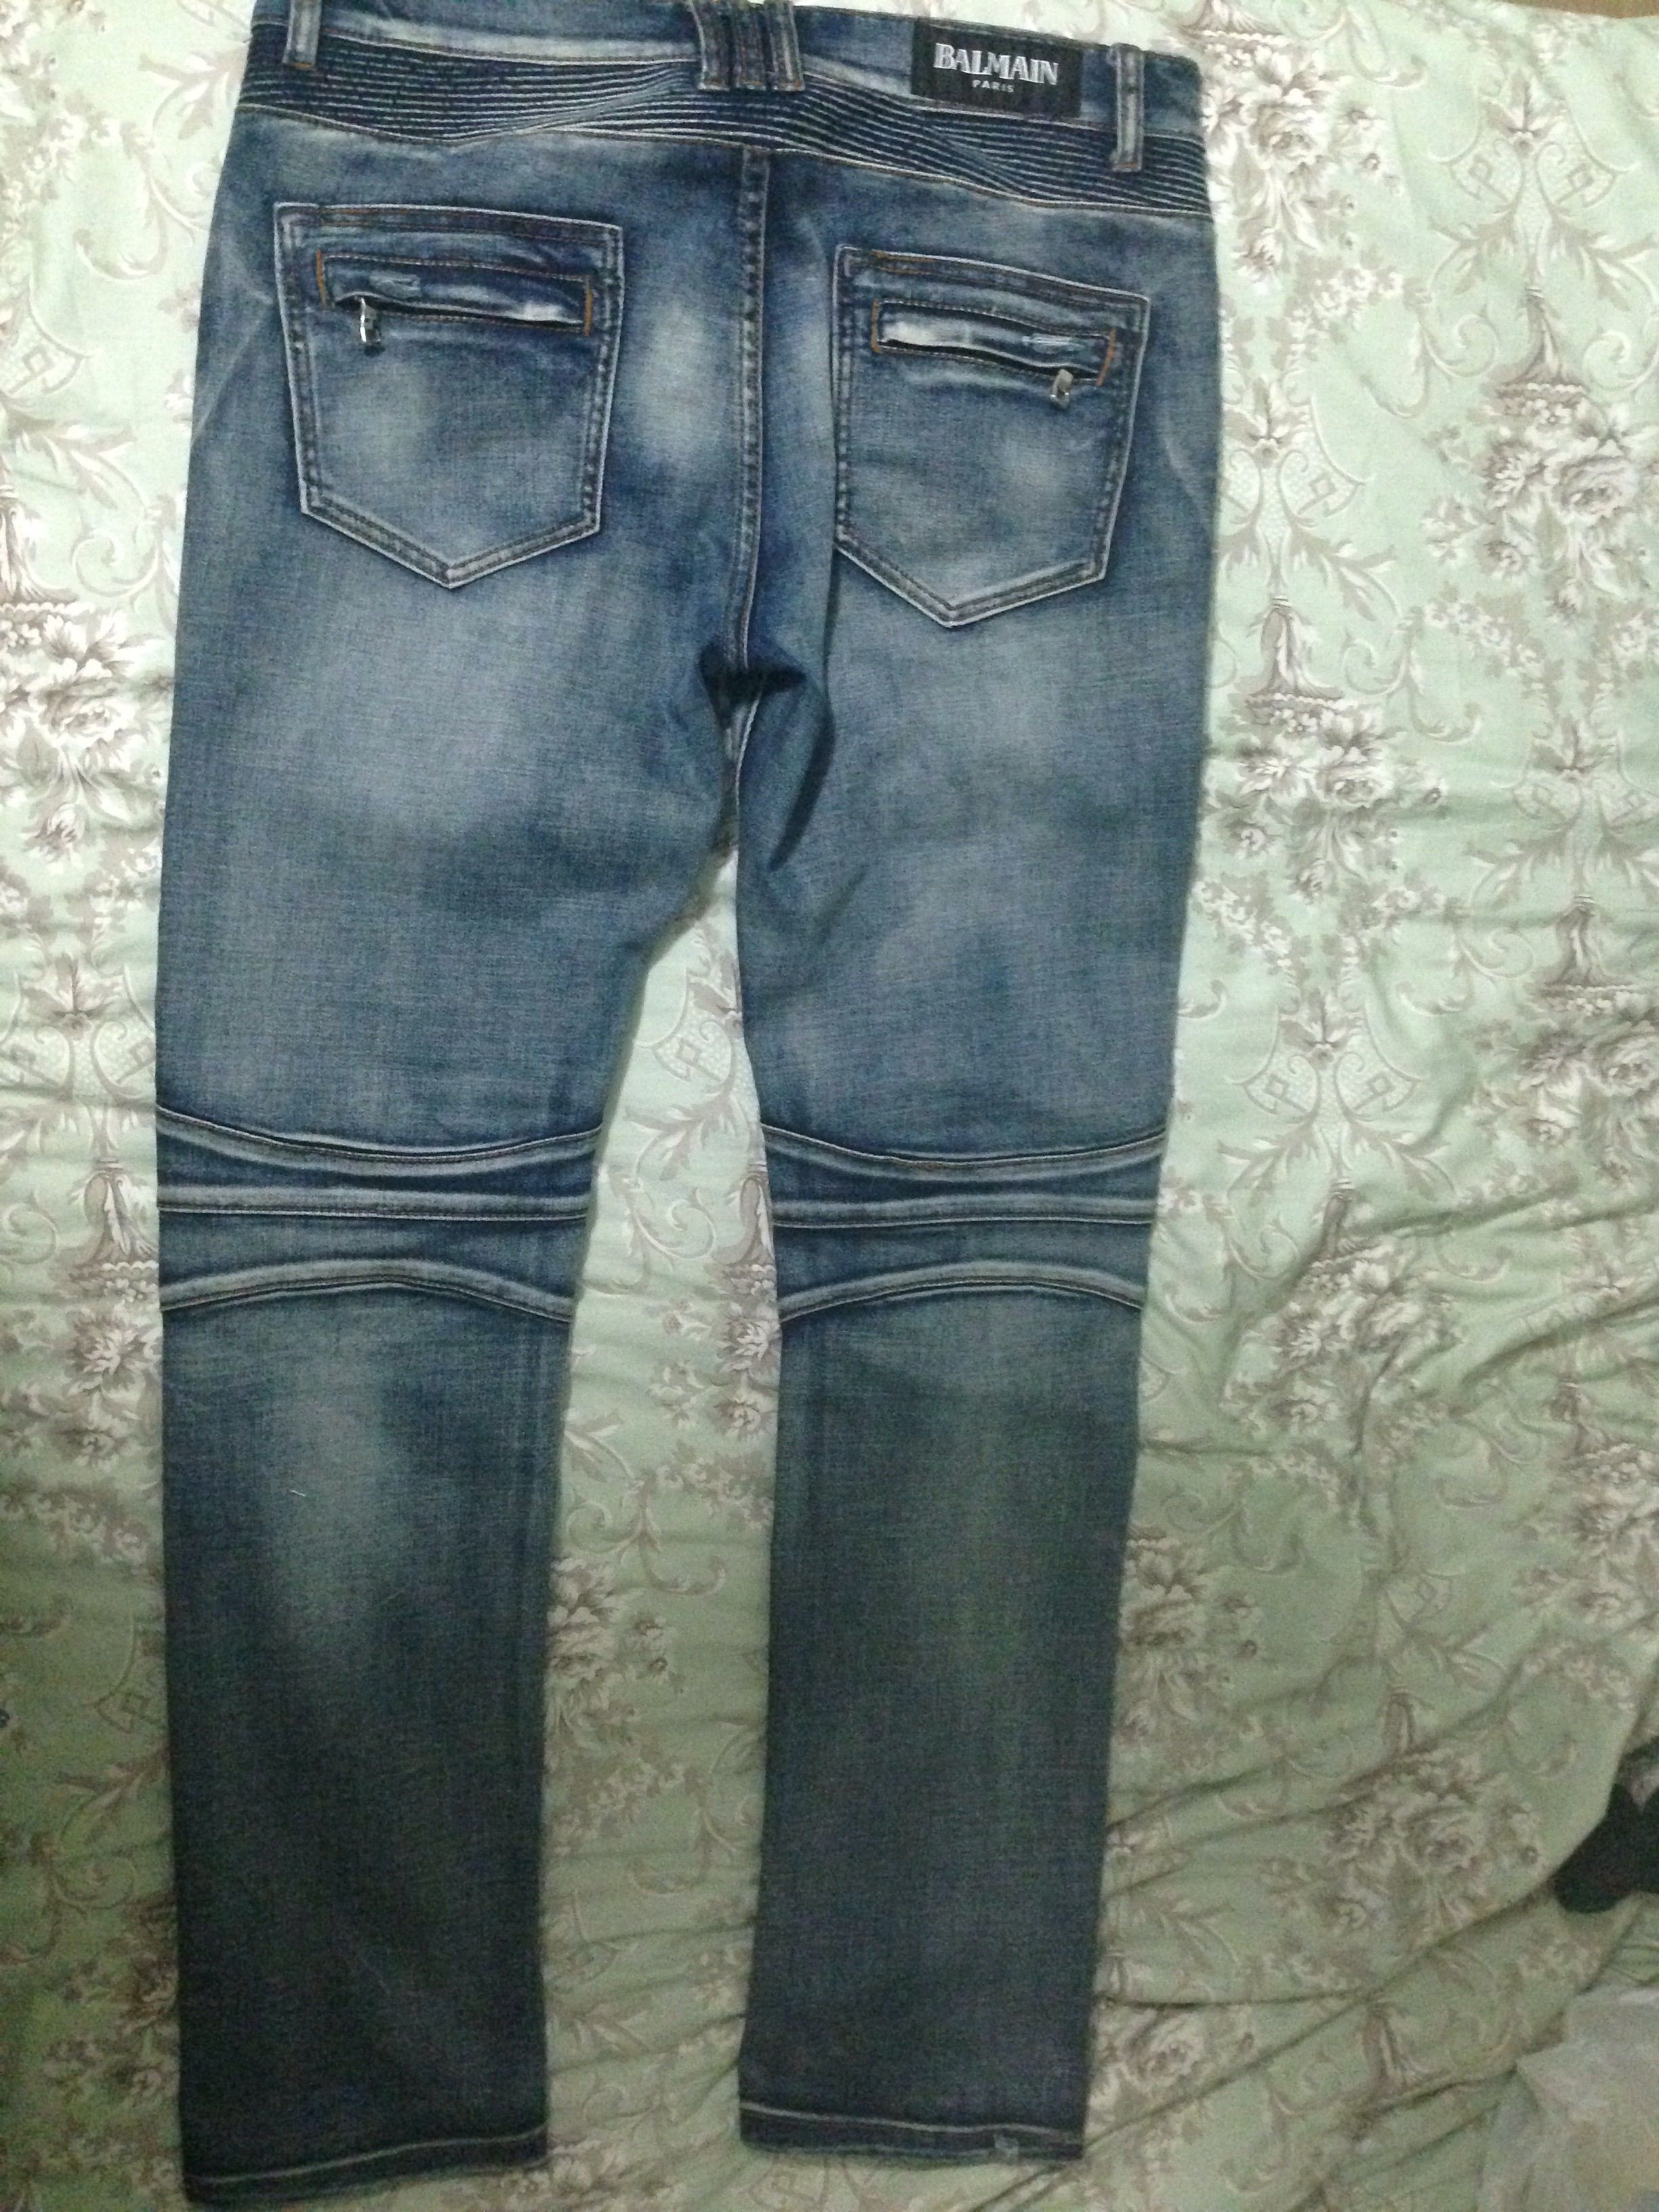 nødvendig mestre struktur balmain biker jeans. is it fake or real? helpe please | Styleforum